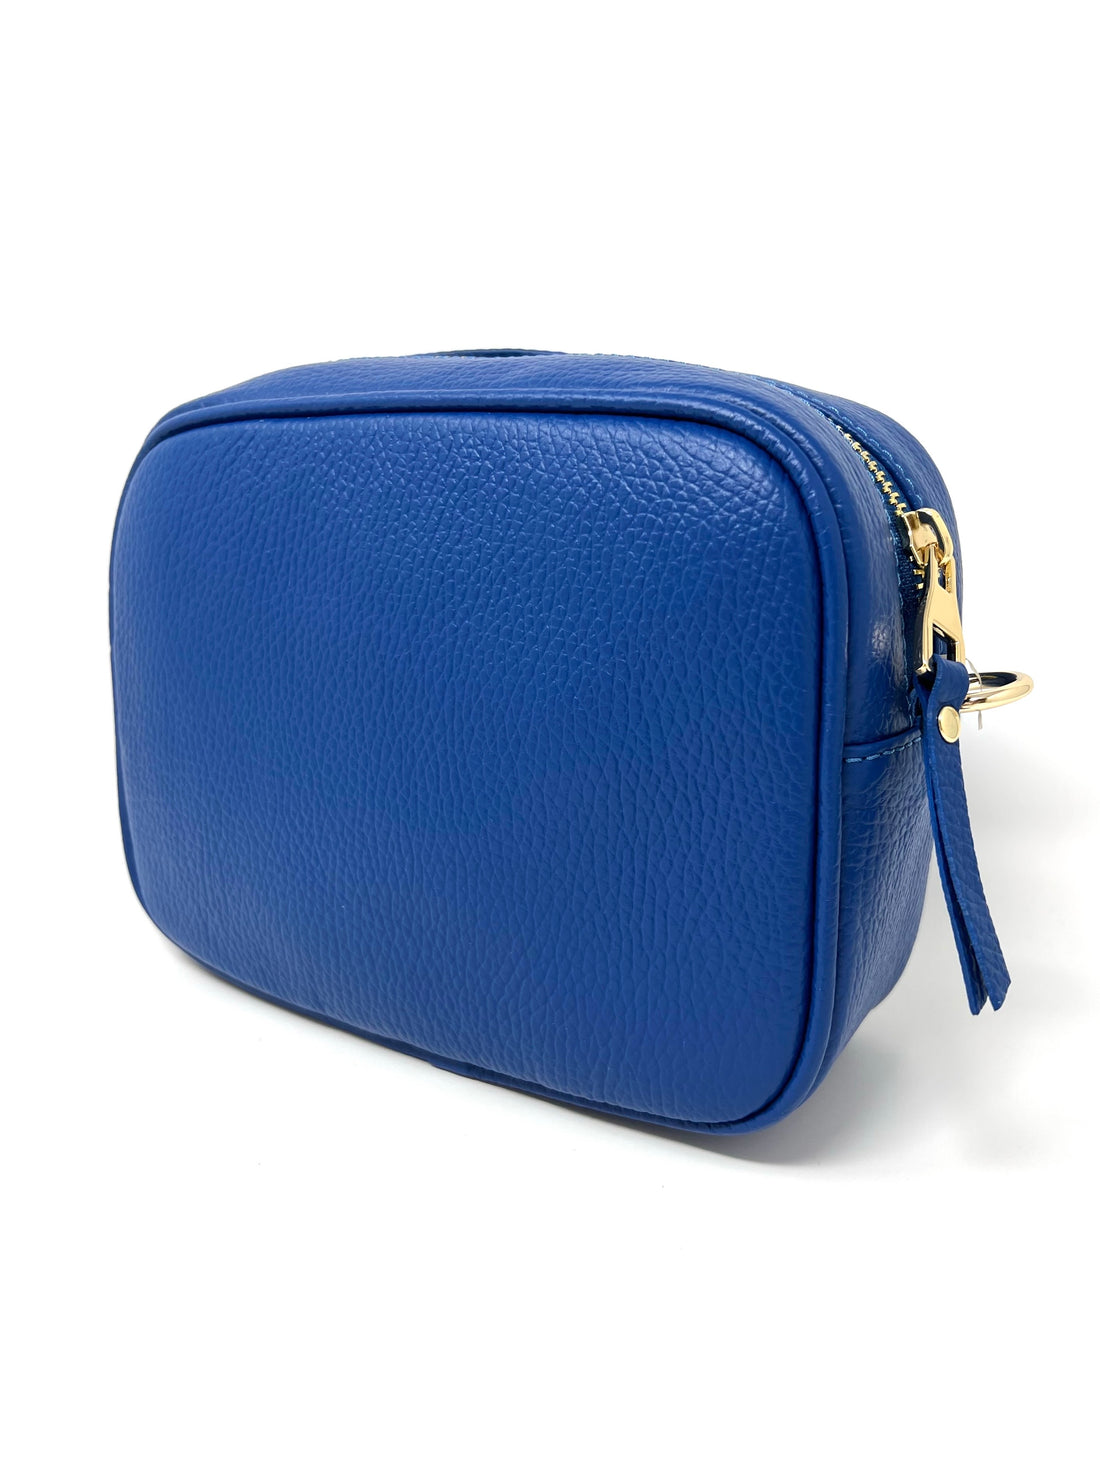 Firenze Bag in Royal Blue